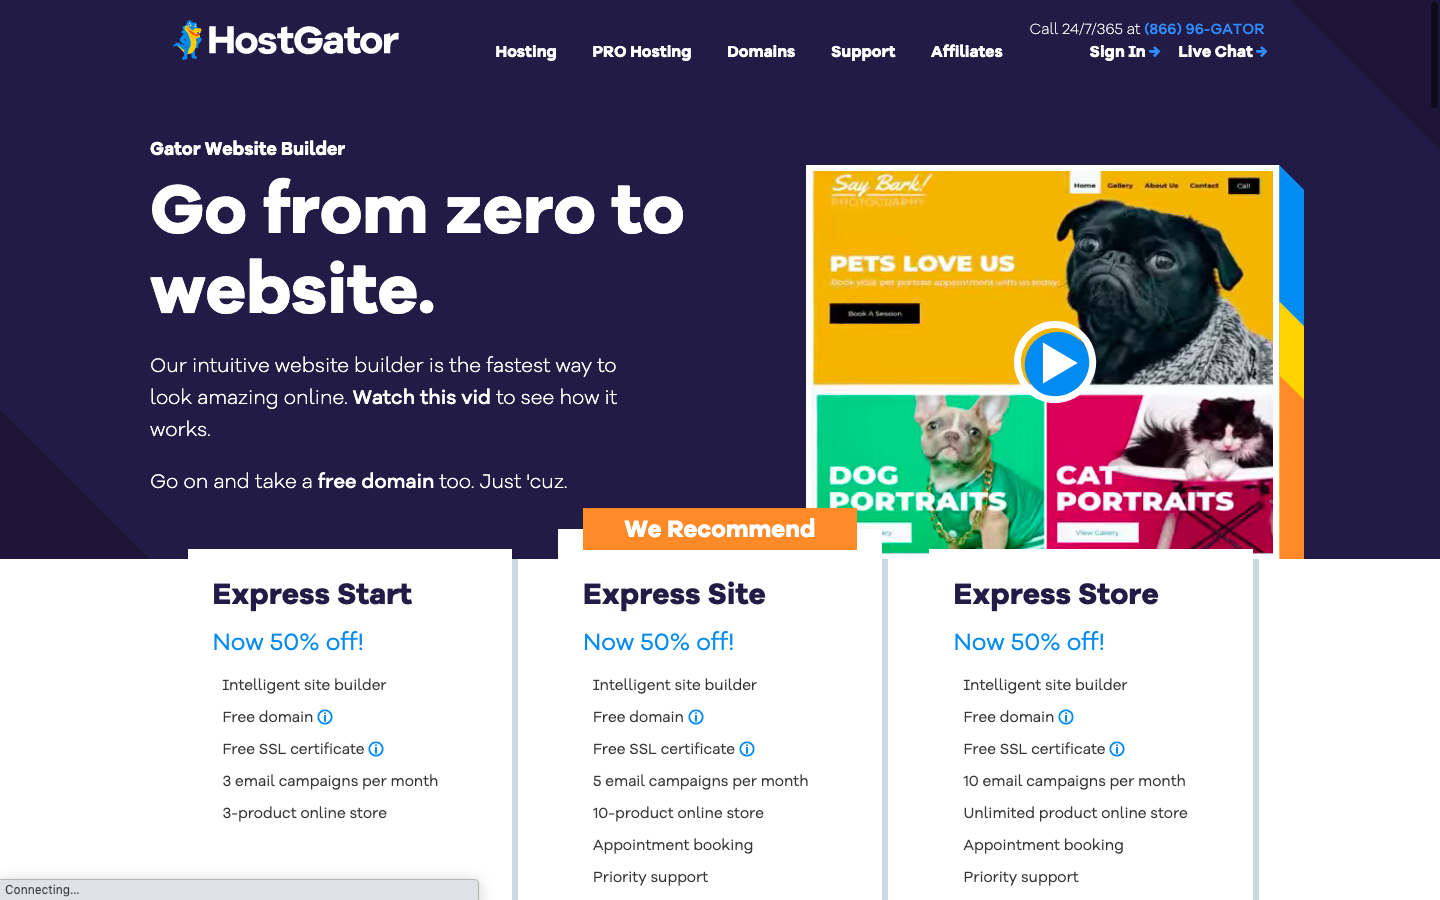 Gator website builder